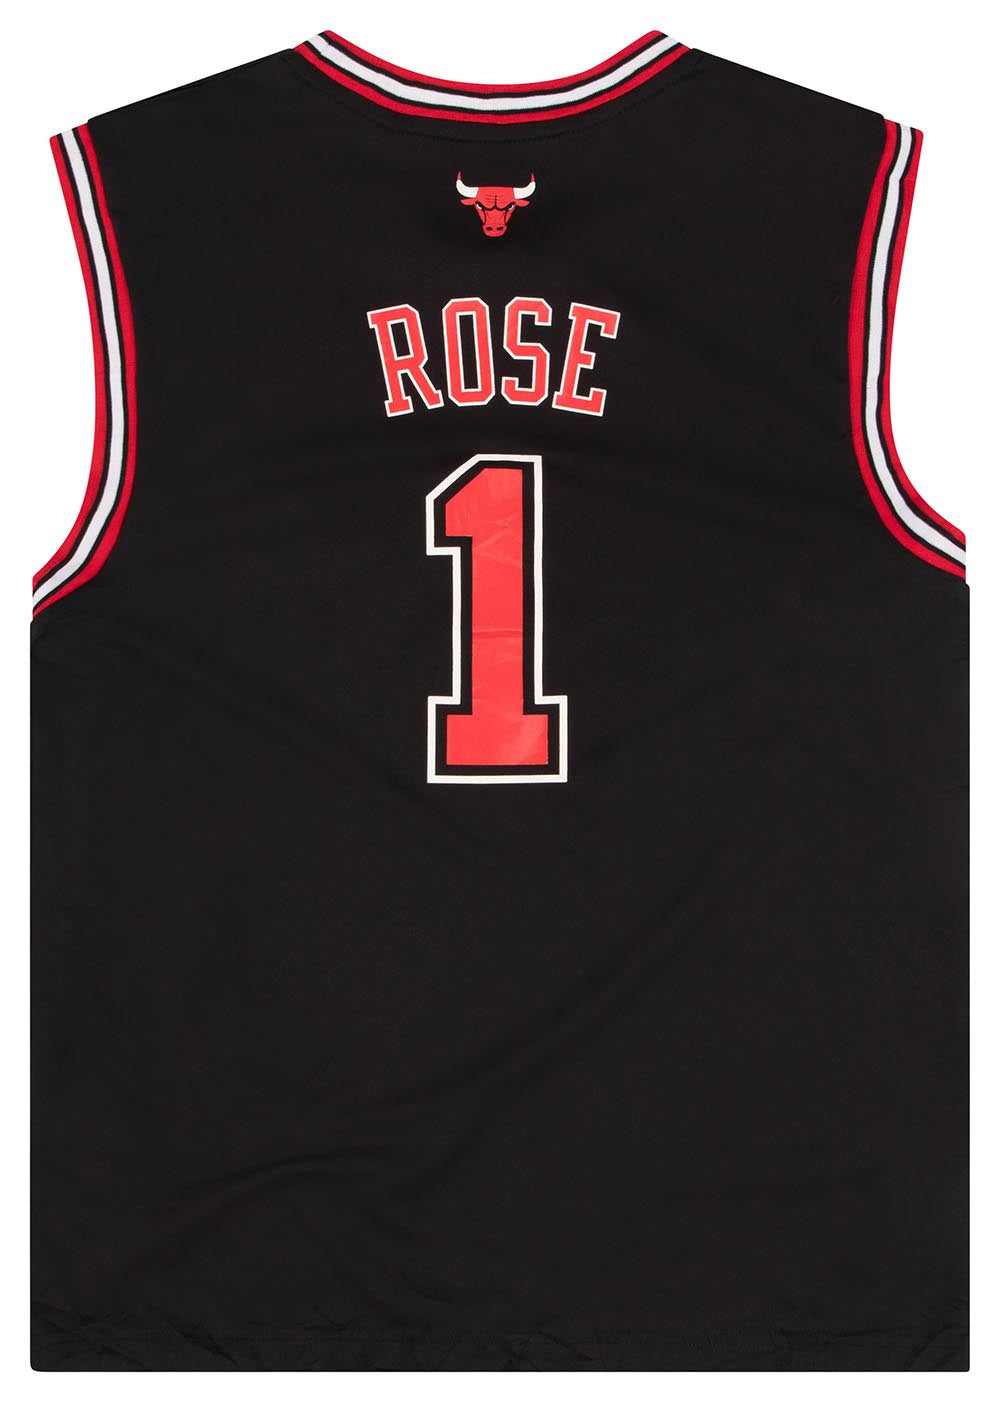 2010-14 CHICAGO BULLS ROSE #1 ADIDAS JERSEY (ALTERNATE) M